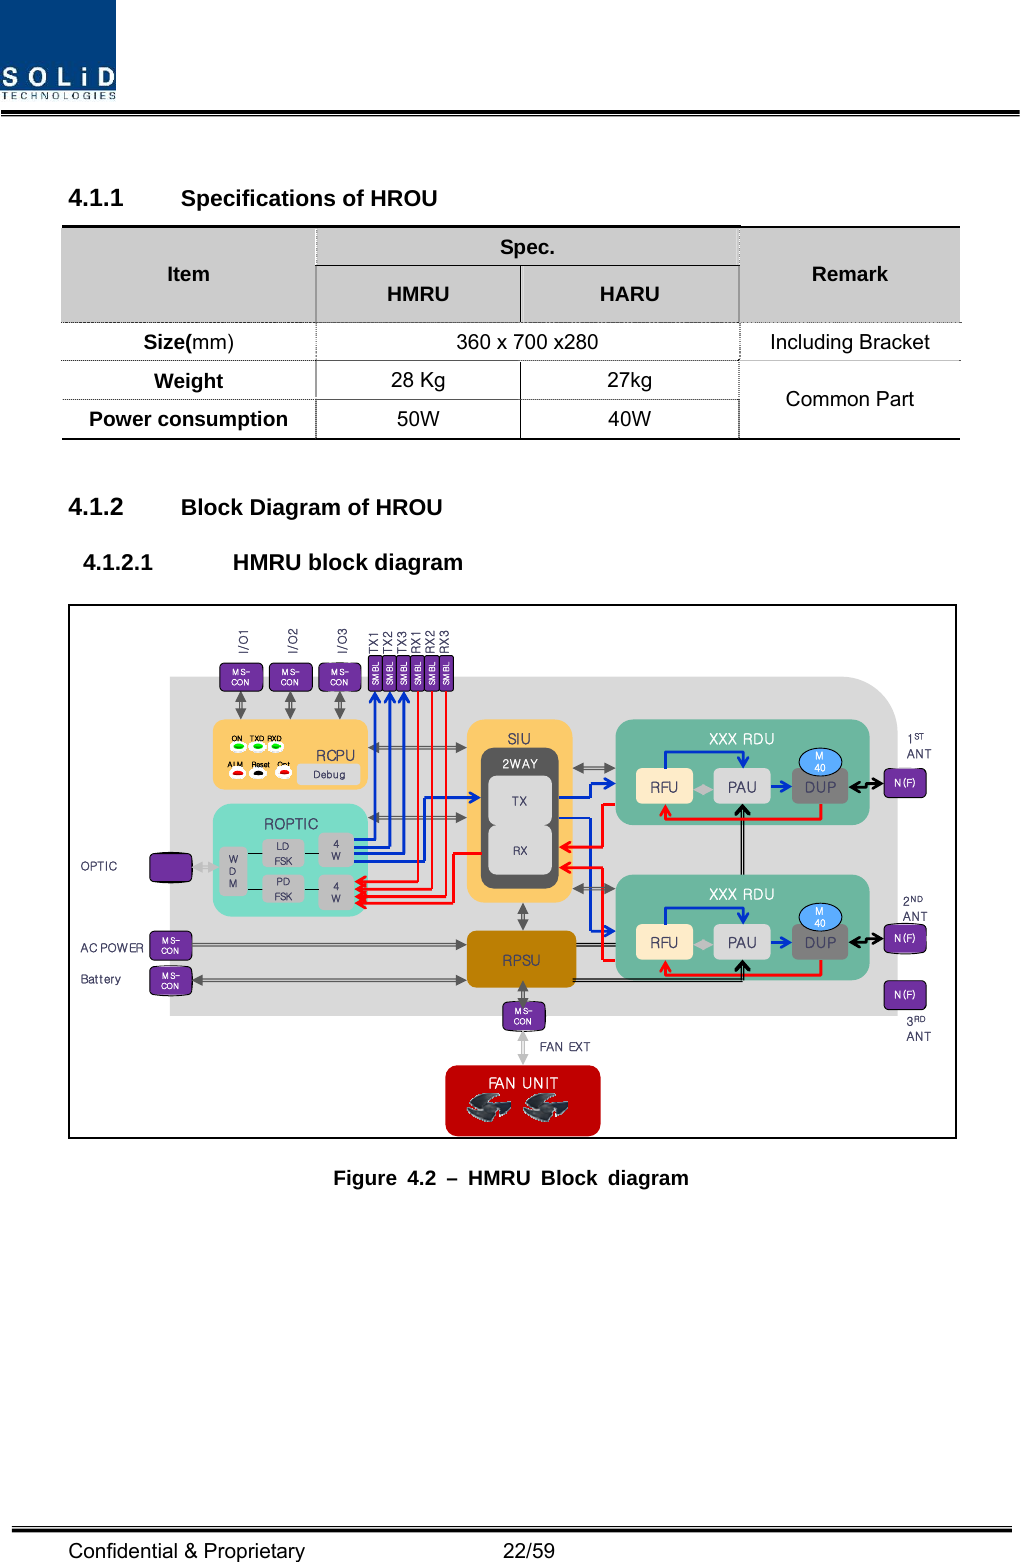  Confidential &amp; Proprietary                   22/59  4.1.1  Specifications of HROU Spec. Item  HMRU  HARU  Remark Size(mm) 360 x 700 x280  Including Bracket Weight  28 Kg  27kg Power consumption  50W 40W Common Part  4.1.2  Block Diagram of HROU 4.1.2.1  HMRU block diagram SIU2WAYXXX RDURCPURXDResetON TXDALM OptDebugRPSUTXRXROPTICWDM4W4WRFU PA U DUPFA N   U N I TAC POWERMS-CONMS-CONBat t er yOPTICI/O1I/O2I/O3MS-CONMS-CONMS-CONSM BLSM BLSM BLSM BLSM BLSM BLTX1TX2TX3RX1RX2RX3MS-CONN(F)XXX RDURFU PA U DUP N(F)N(F)1STANT2NDANT3RDANTFAN EXTLDFSKPDFSKM40M40 Figure 4.2 – HMRU Block diagram  